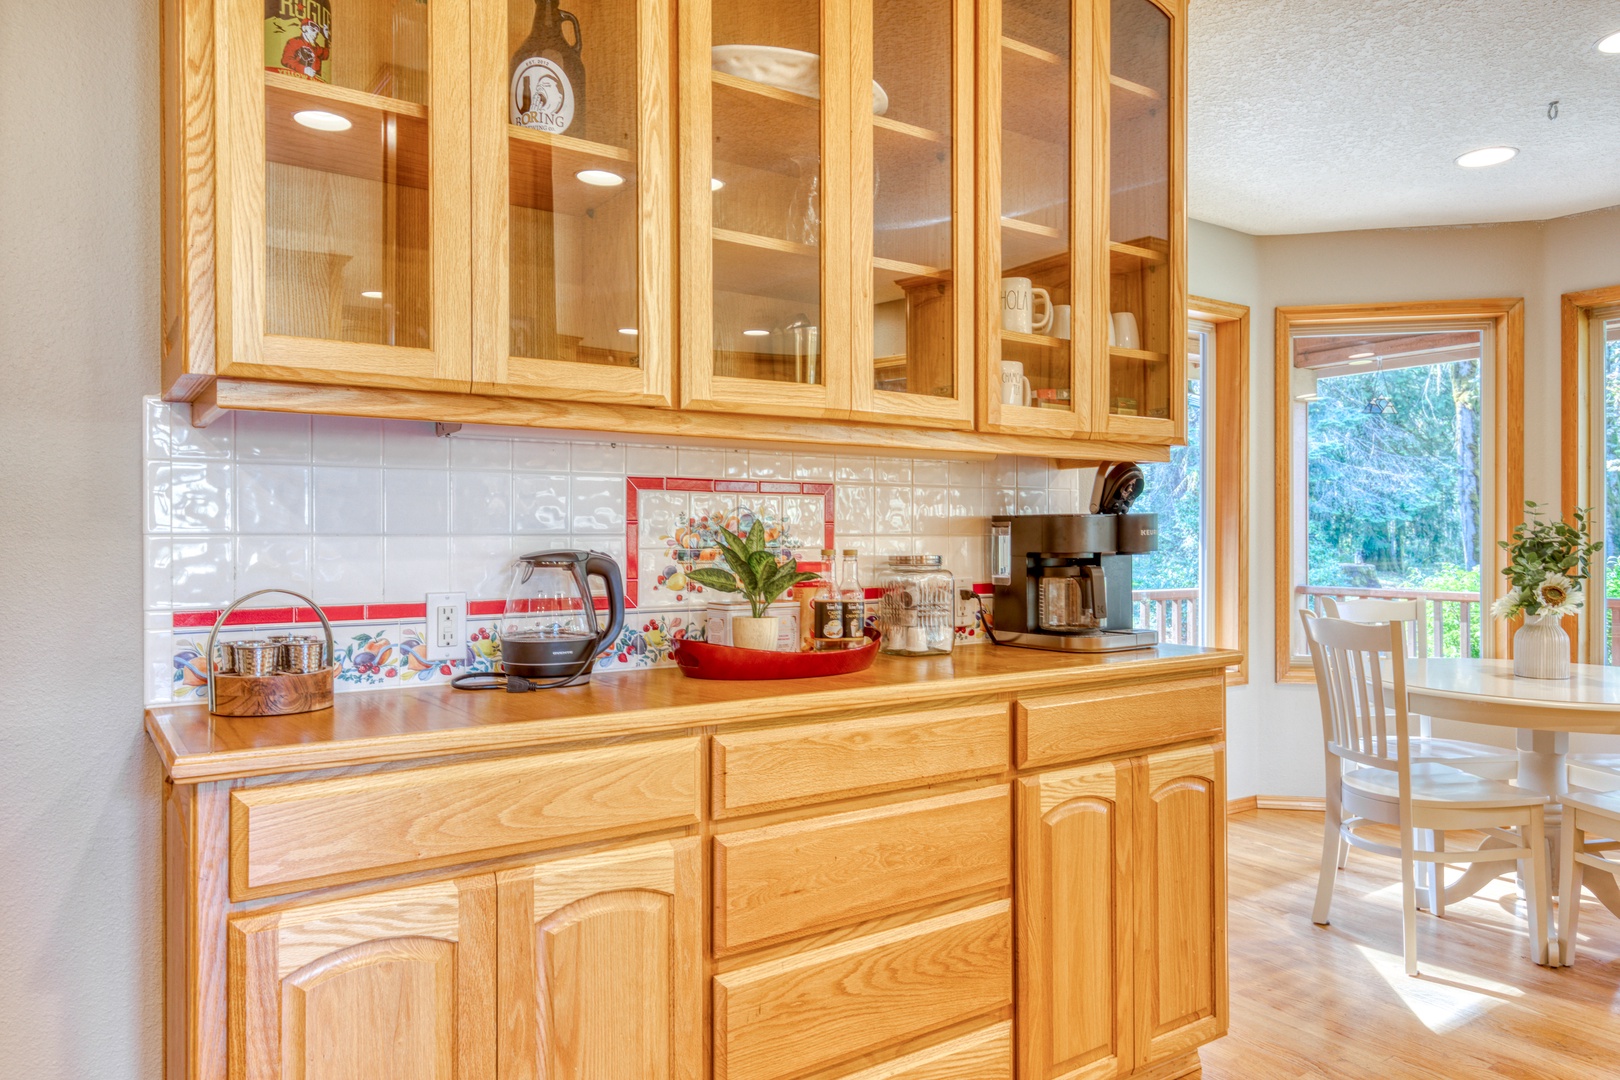 Sandy Vacation Rentals, Iron Mountain - Fully stocked kitchen